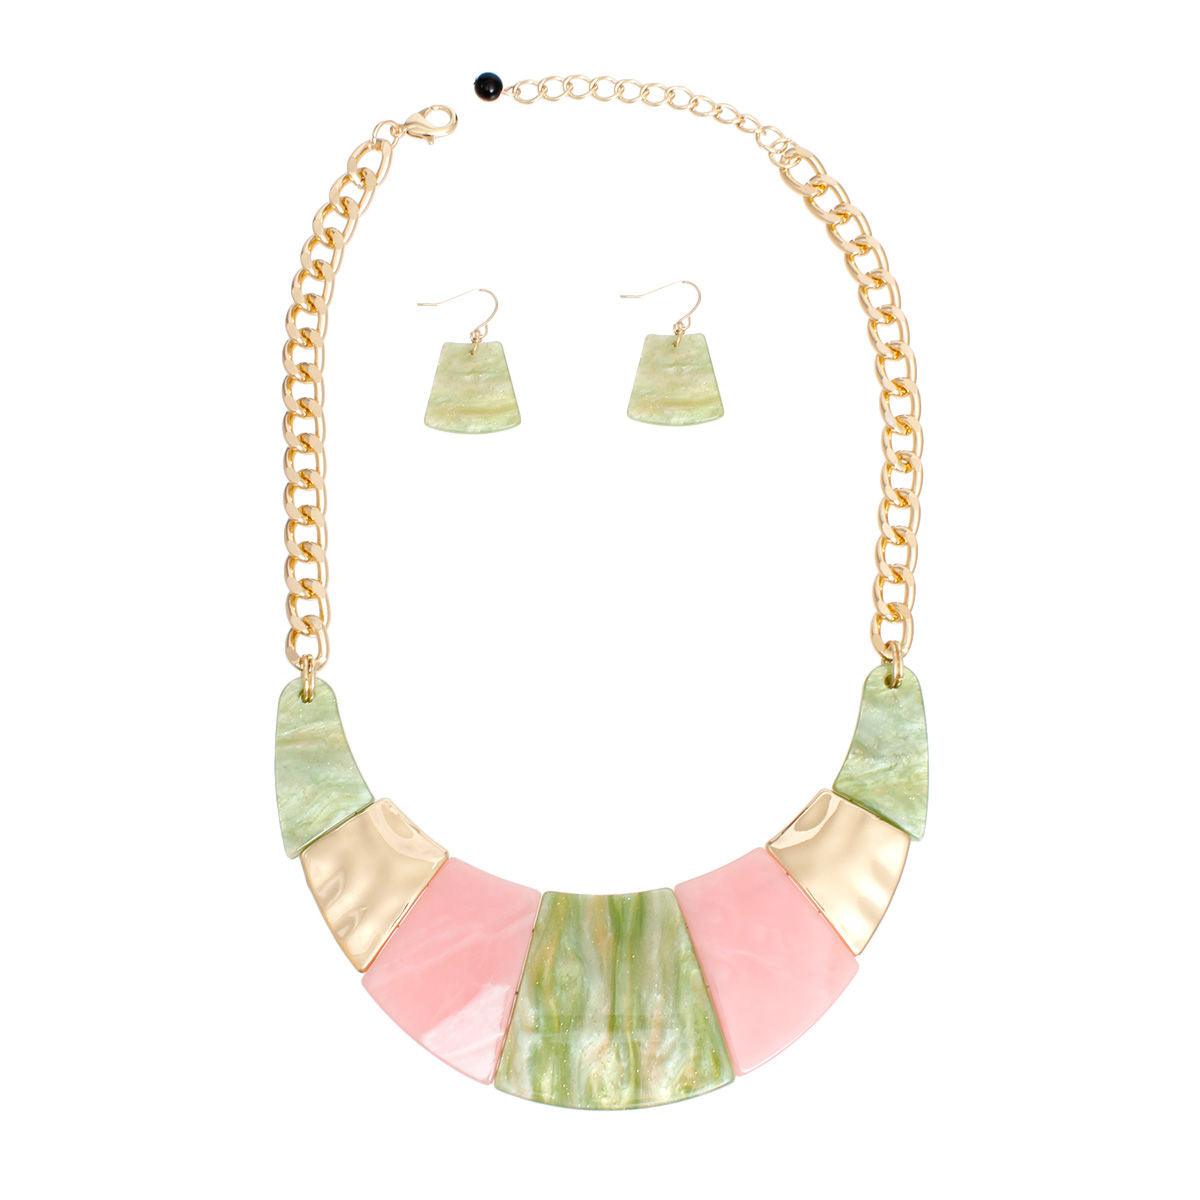 Stylish Marble Effect Pink Green Necklace Set: Gorgeous Fashion Jewelry